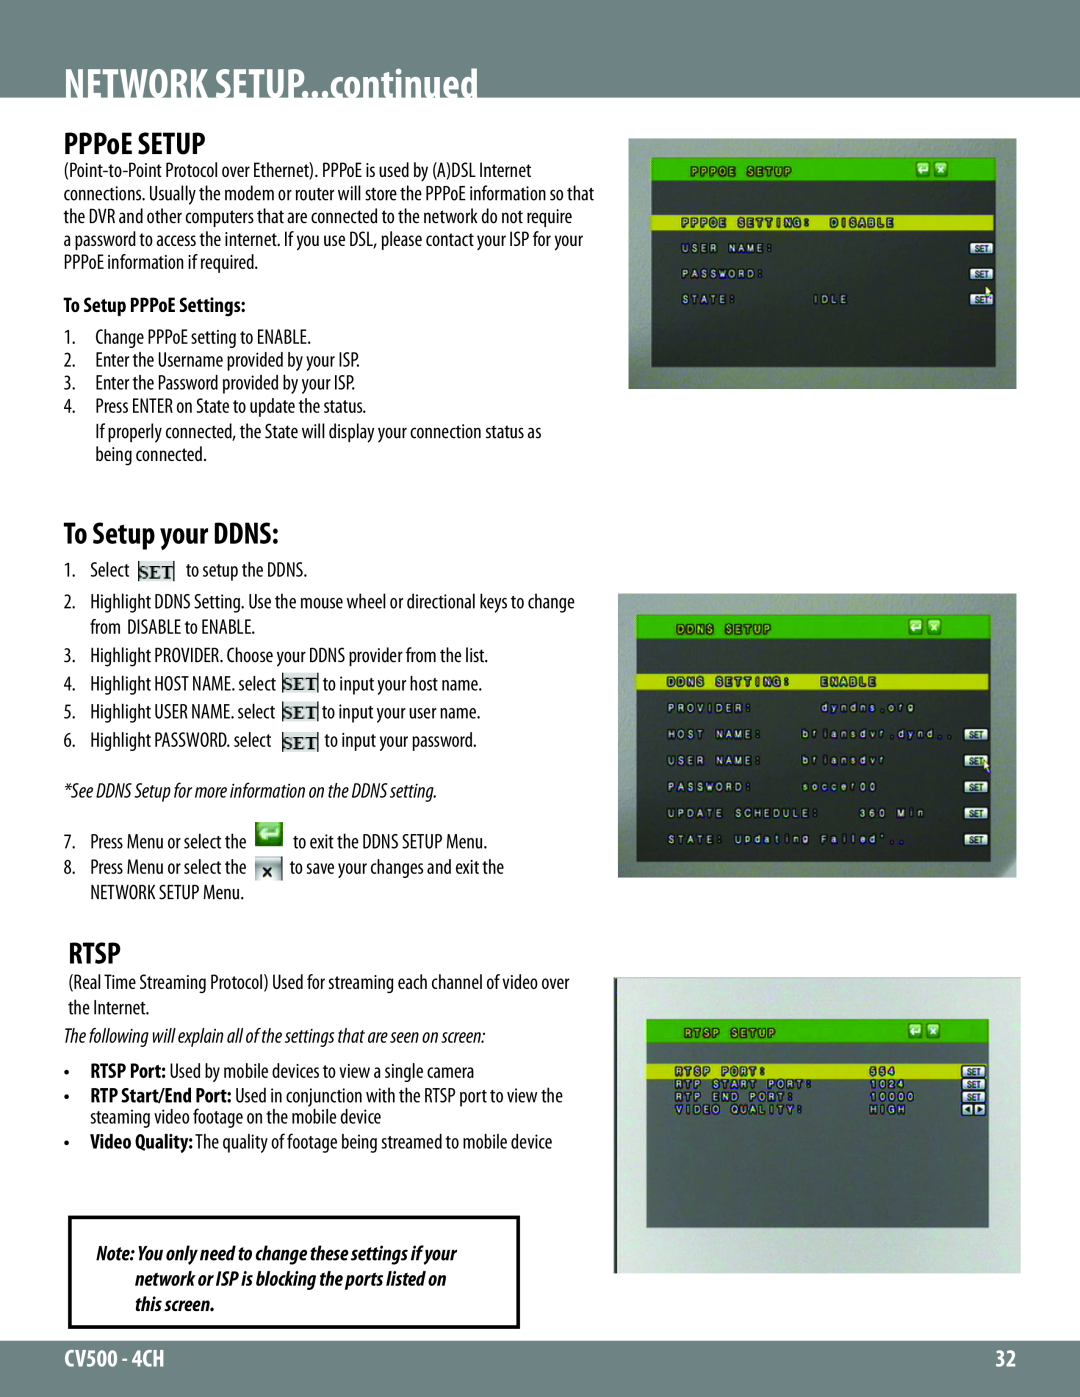 SVAT Electronics 2CV500 - 4CH instruction manual PPPoE SETUP, To Setup your DDNS, Rtsp, NETWORK SETUP...continued 